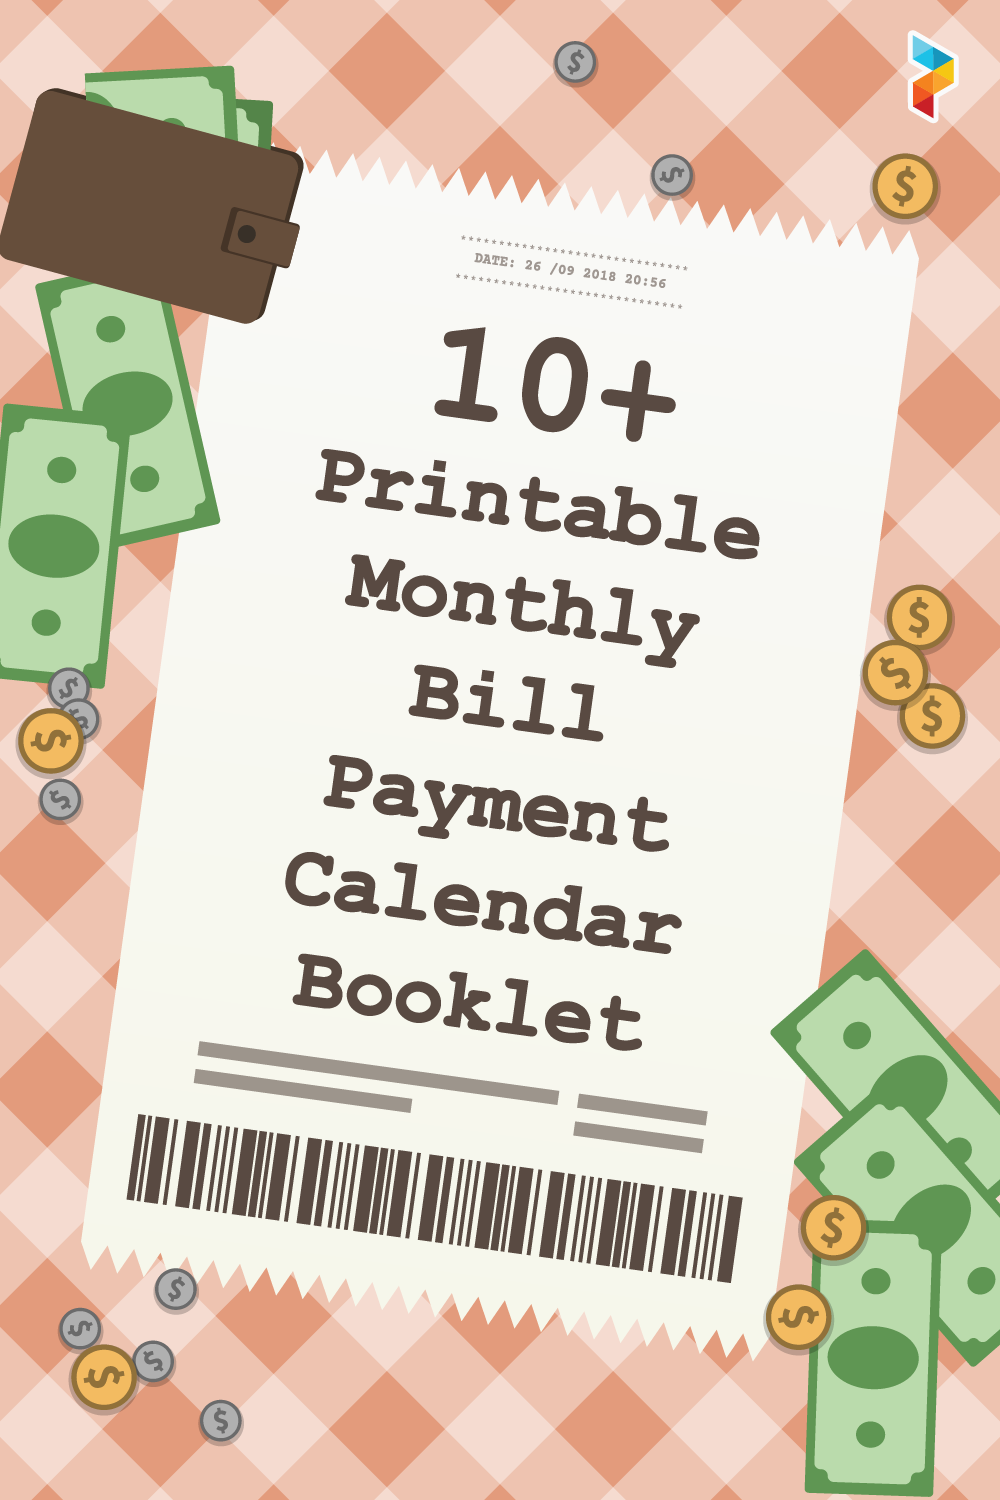 Monthly Bill Payment Calendar Booklet